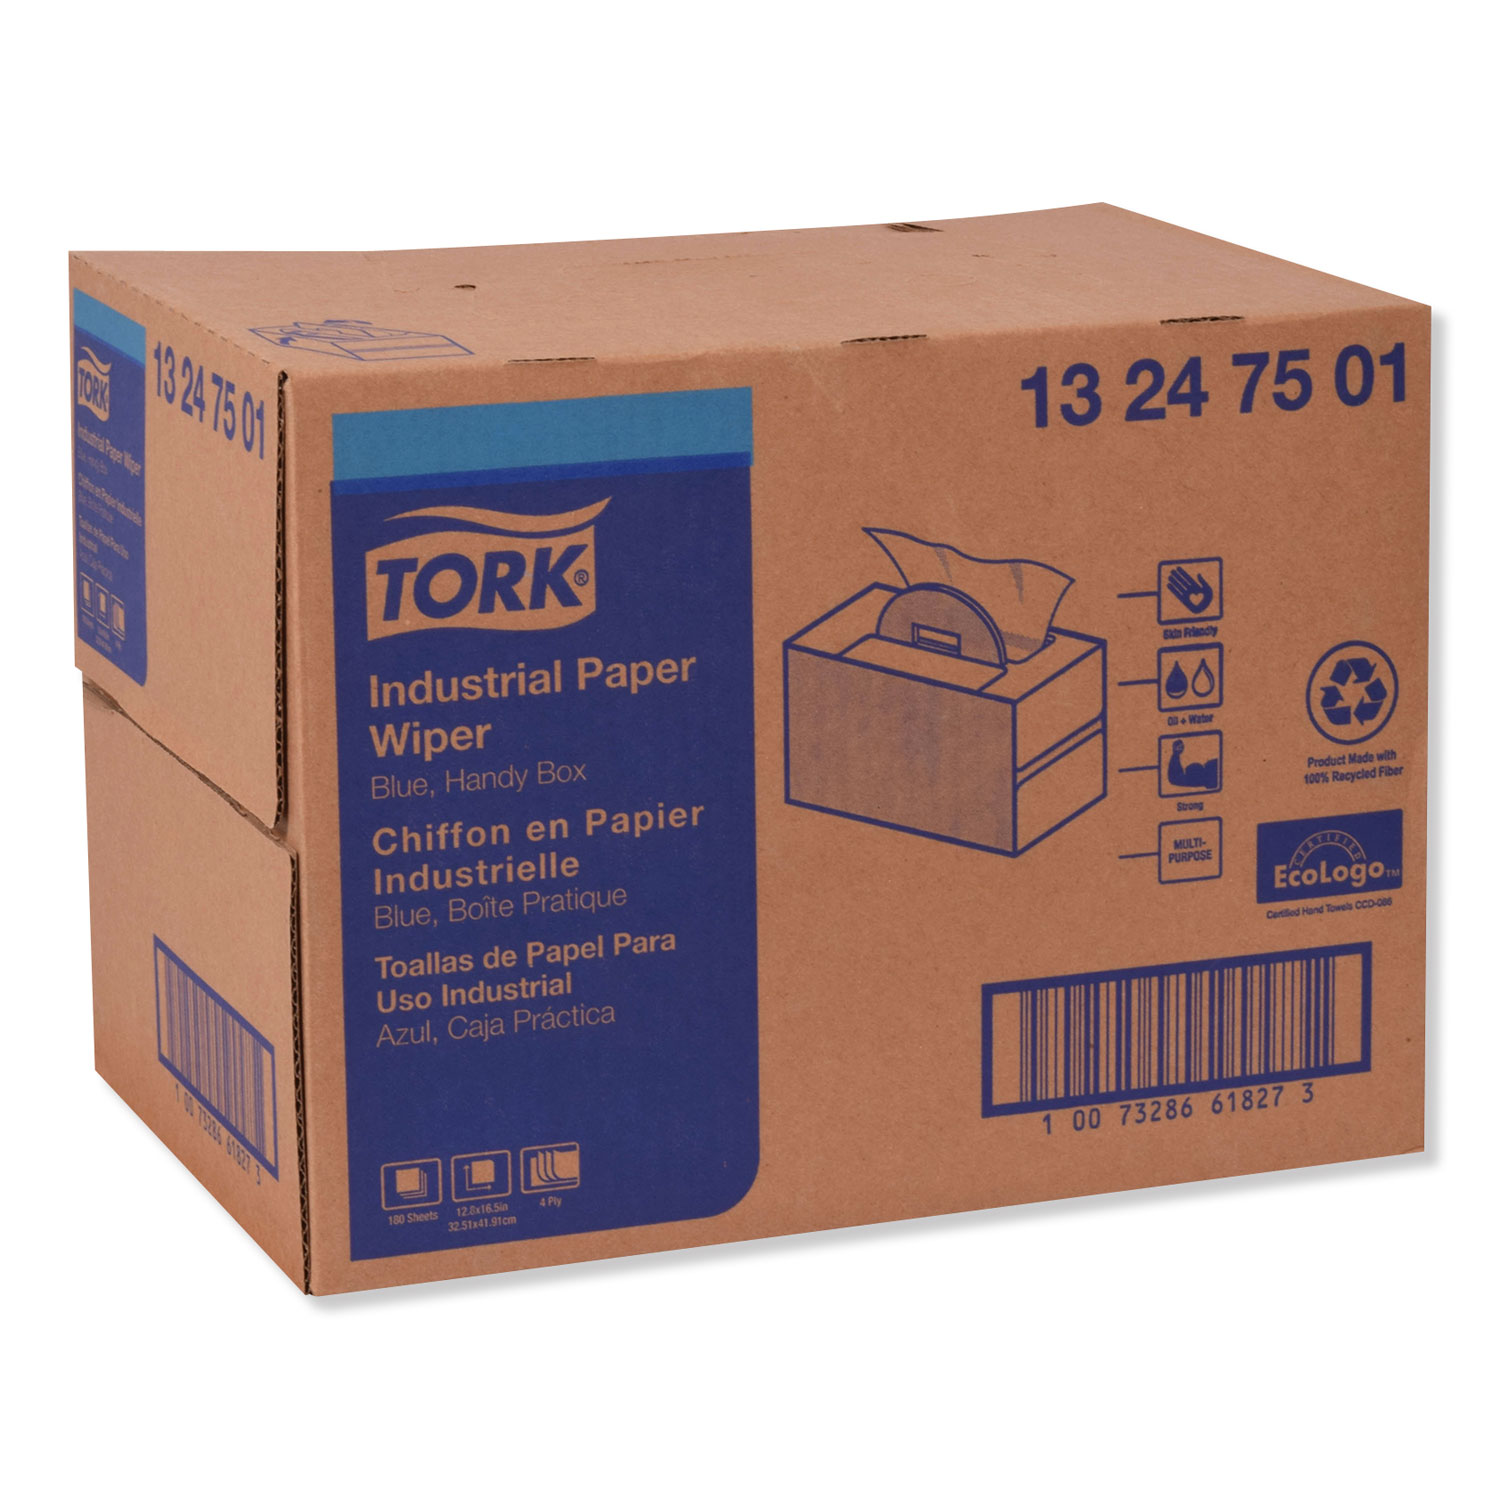 12.8 Width x 16.5 Length Case of 1 Box, 180 Towels Tork 13247501 Industrial Paper Wiper 4-Ply Blue Handy Box 